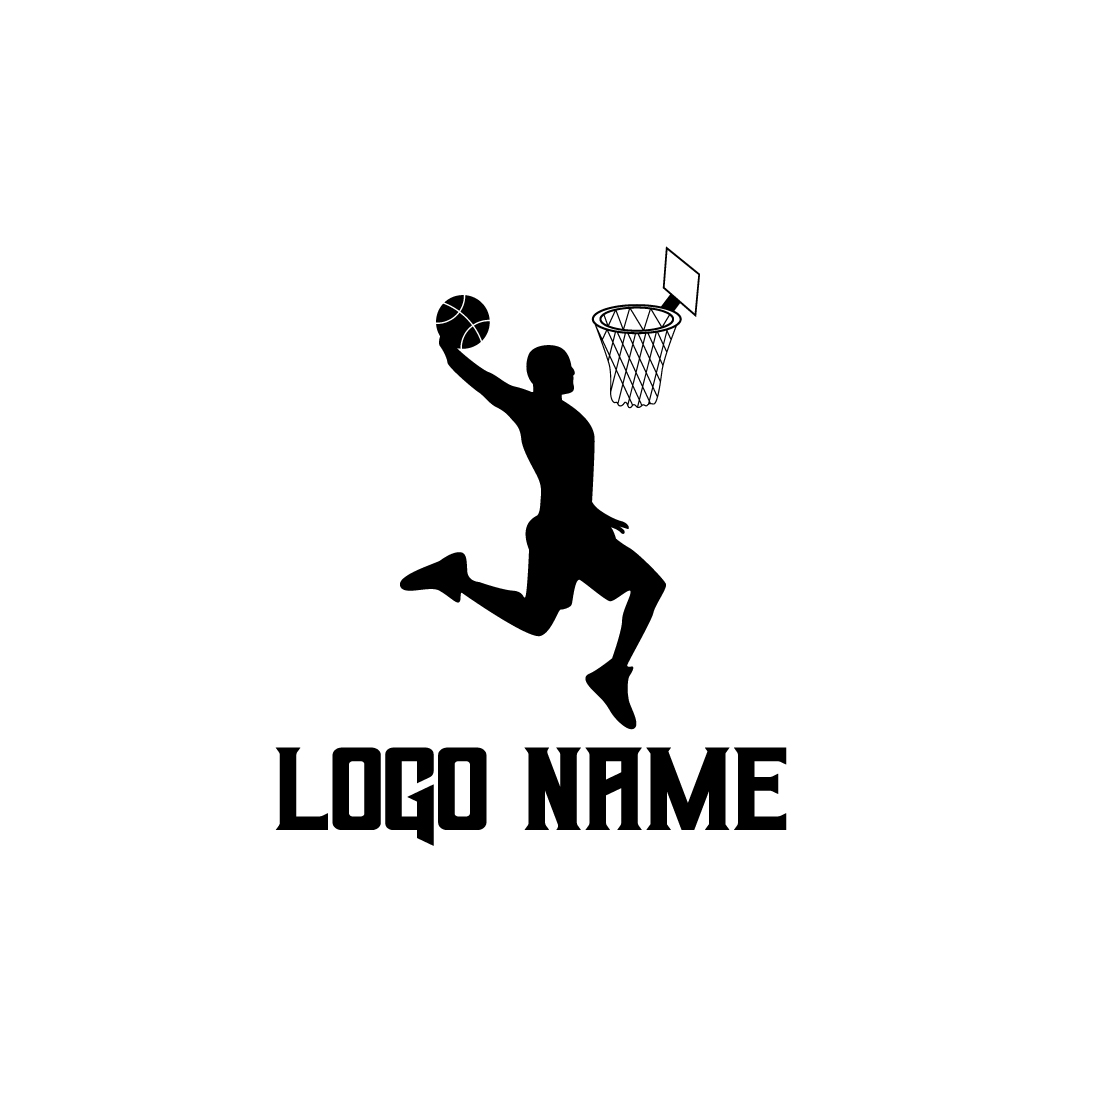 american basketball team logo cover image.